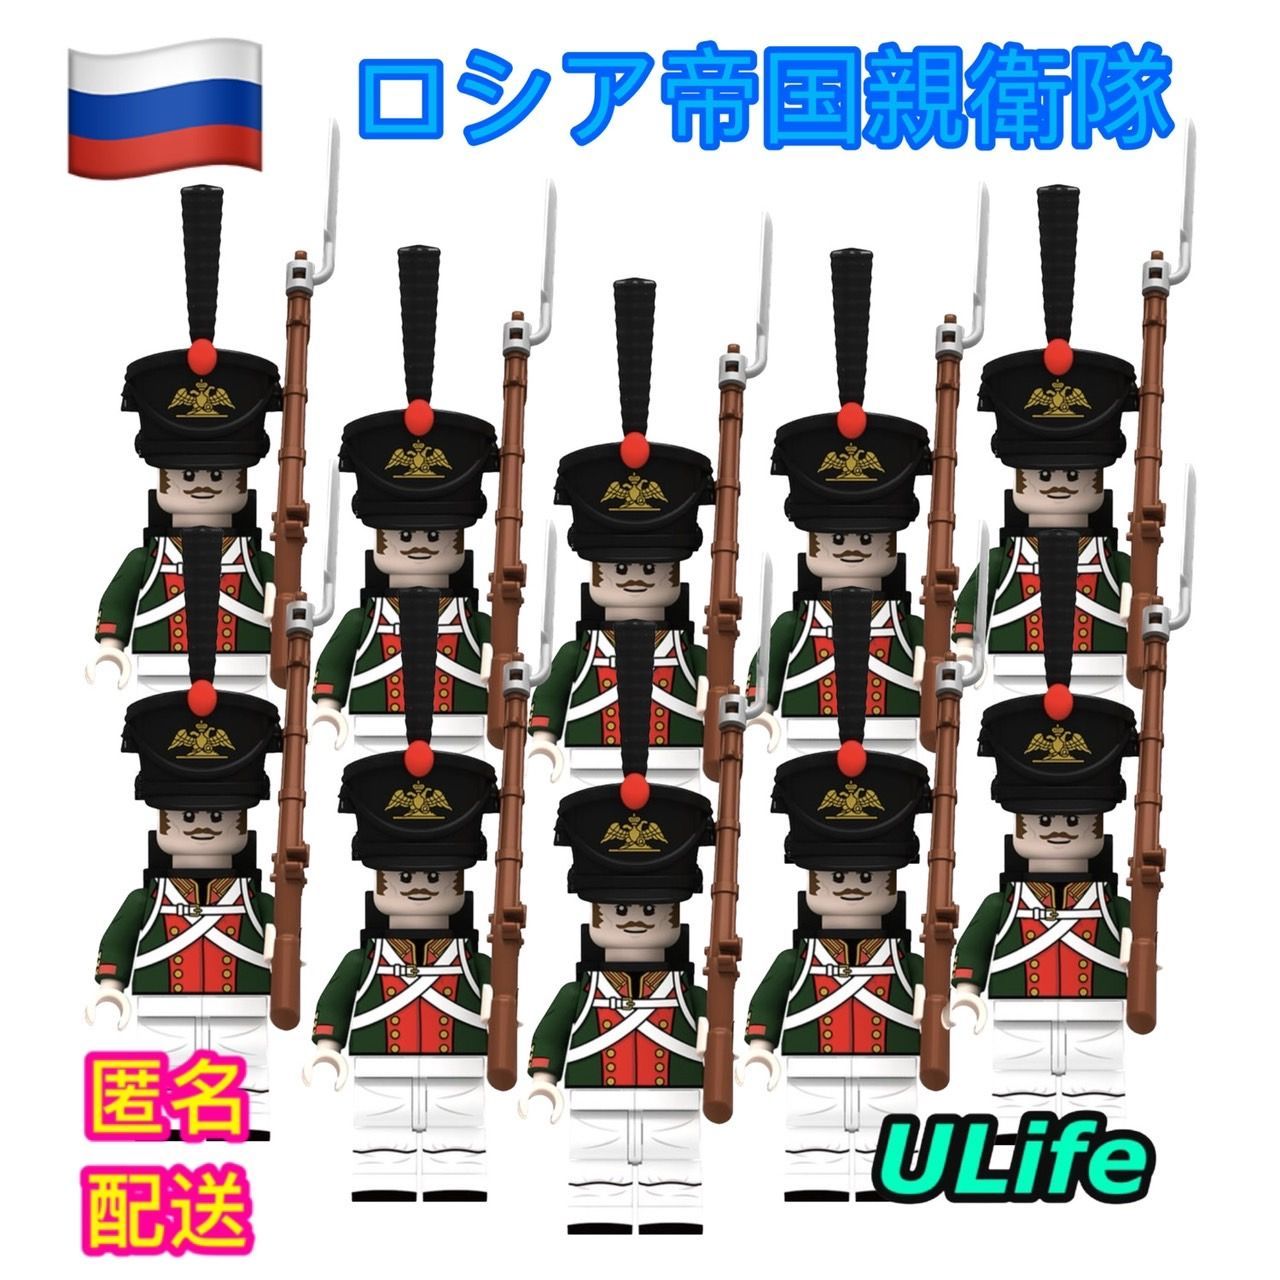 LEGOレゴ互換 10体セットS　ロシア ナポレオン戦争 ミニフィグ フィギュア